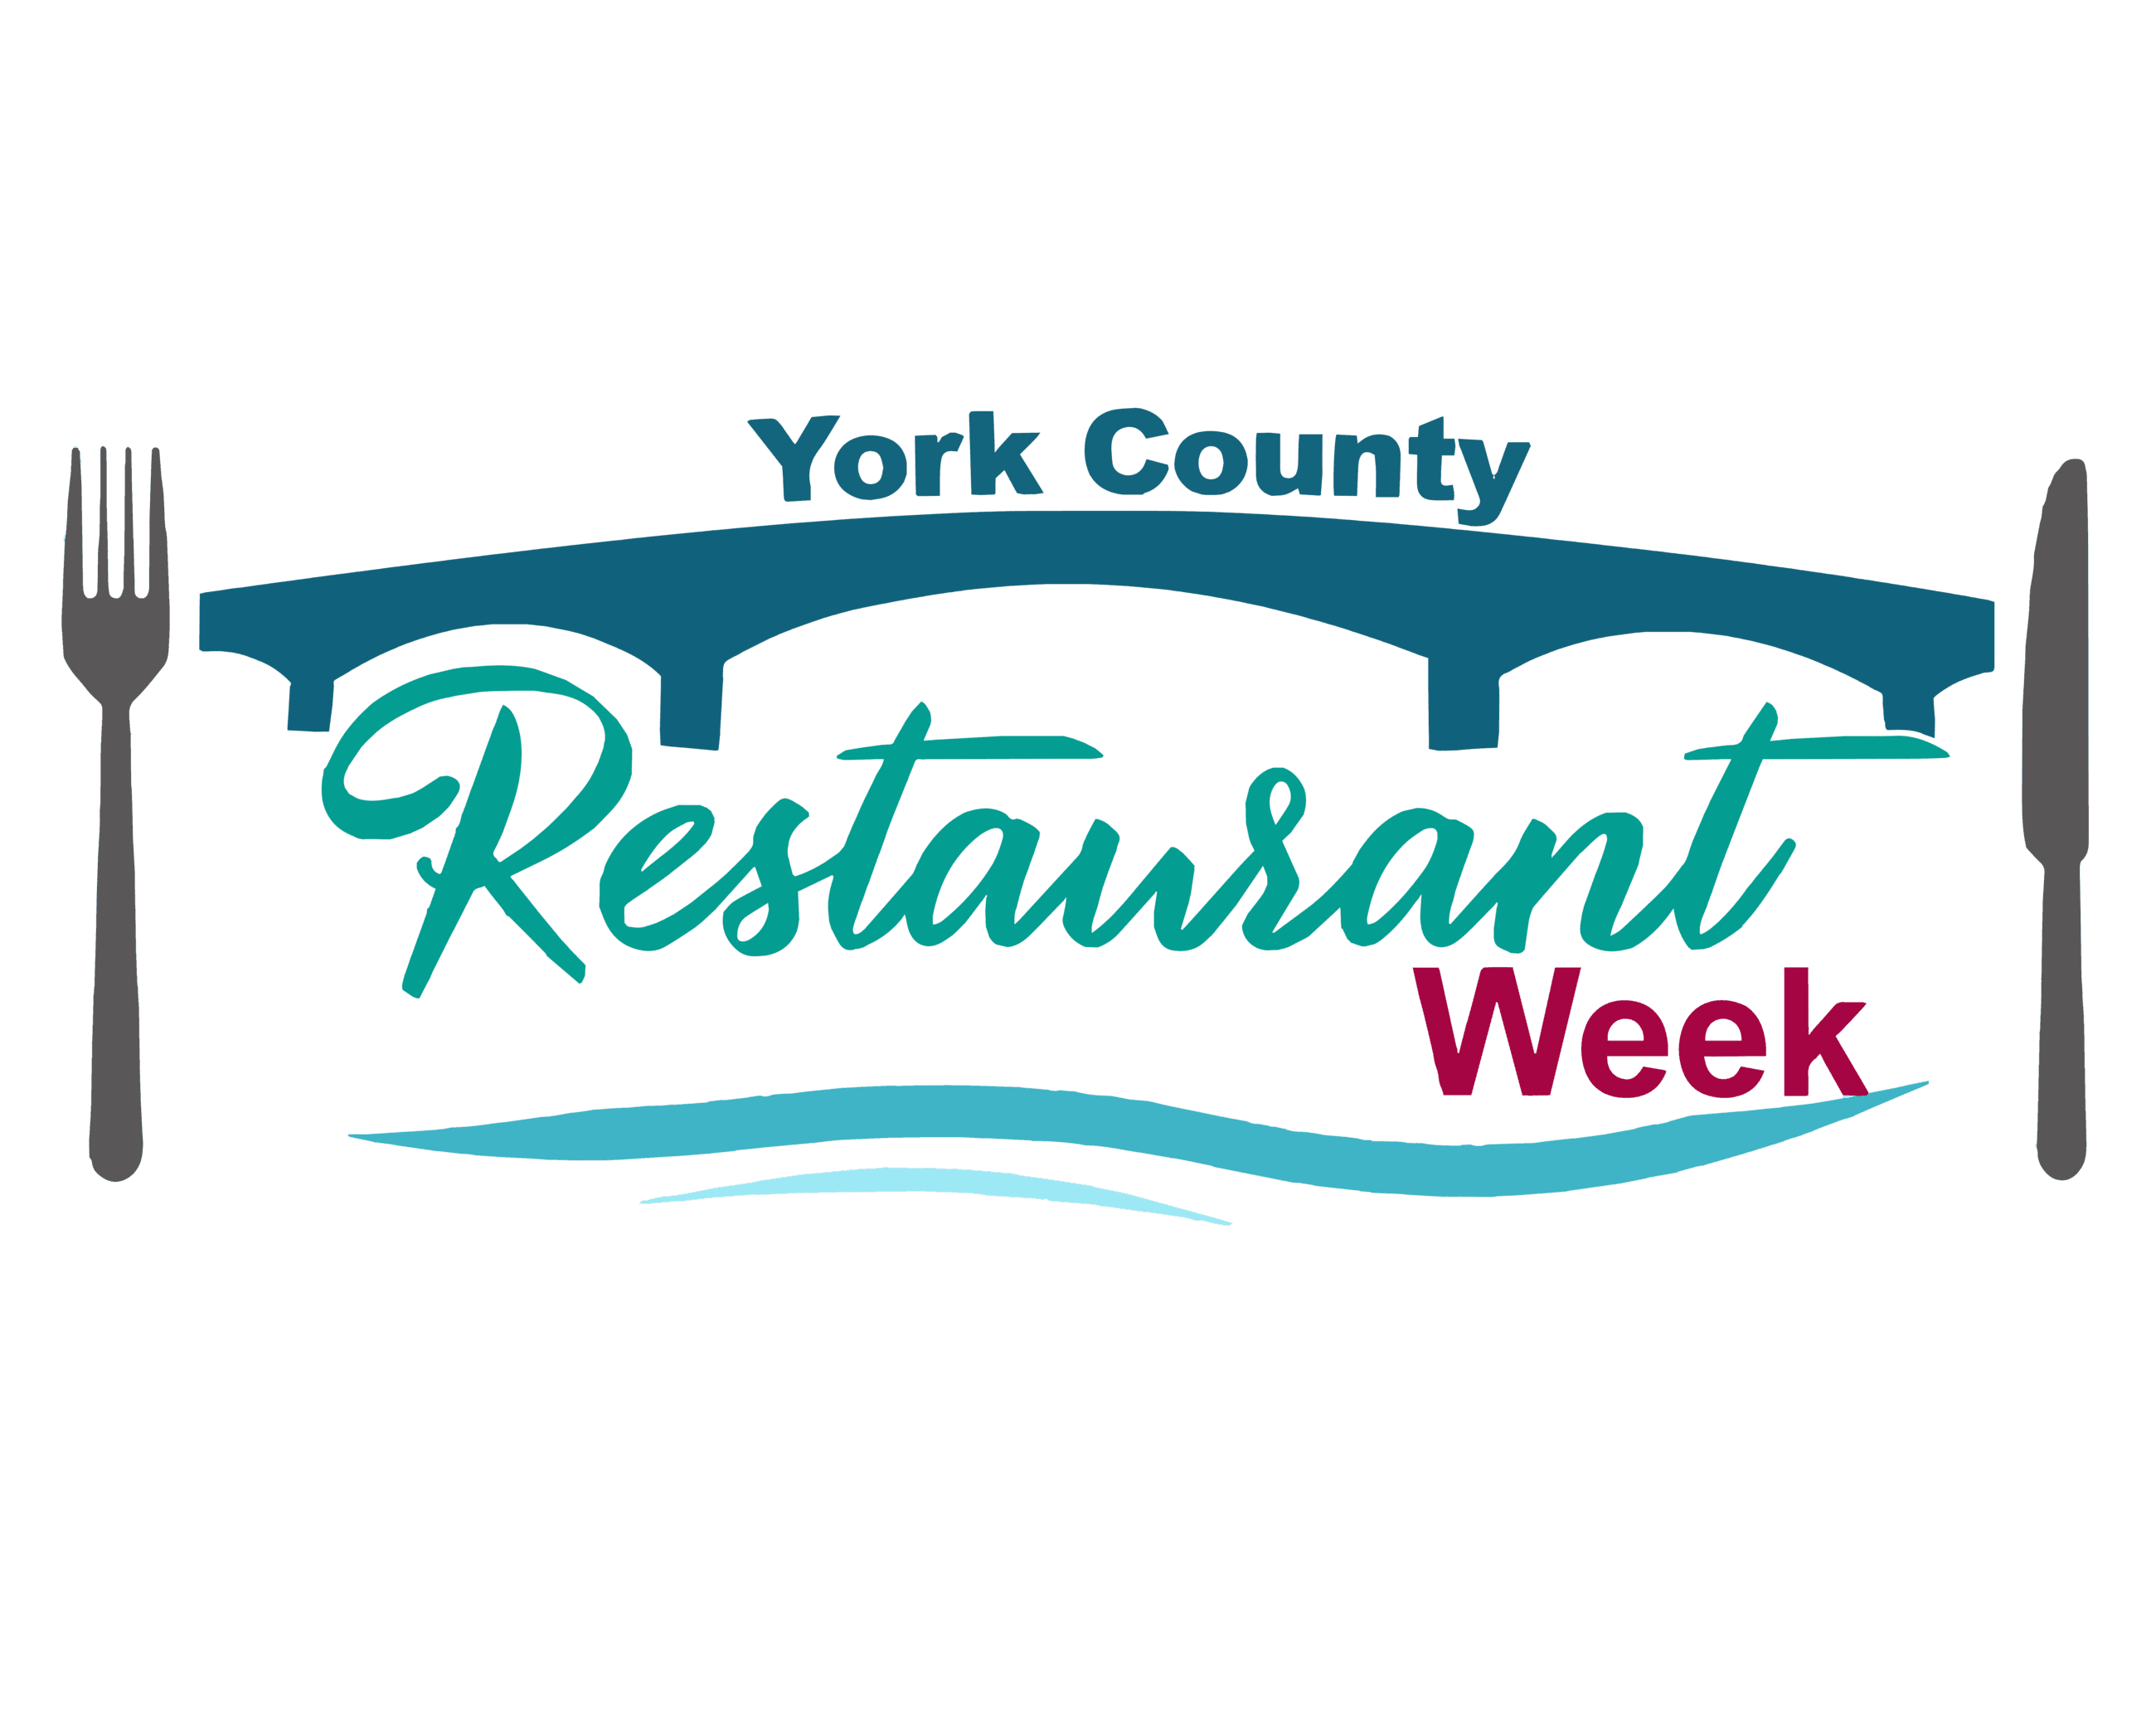 williamsburg virginia york county restaurant week